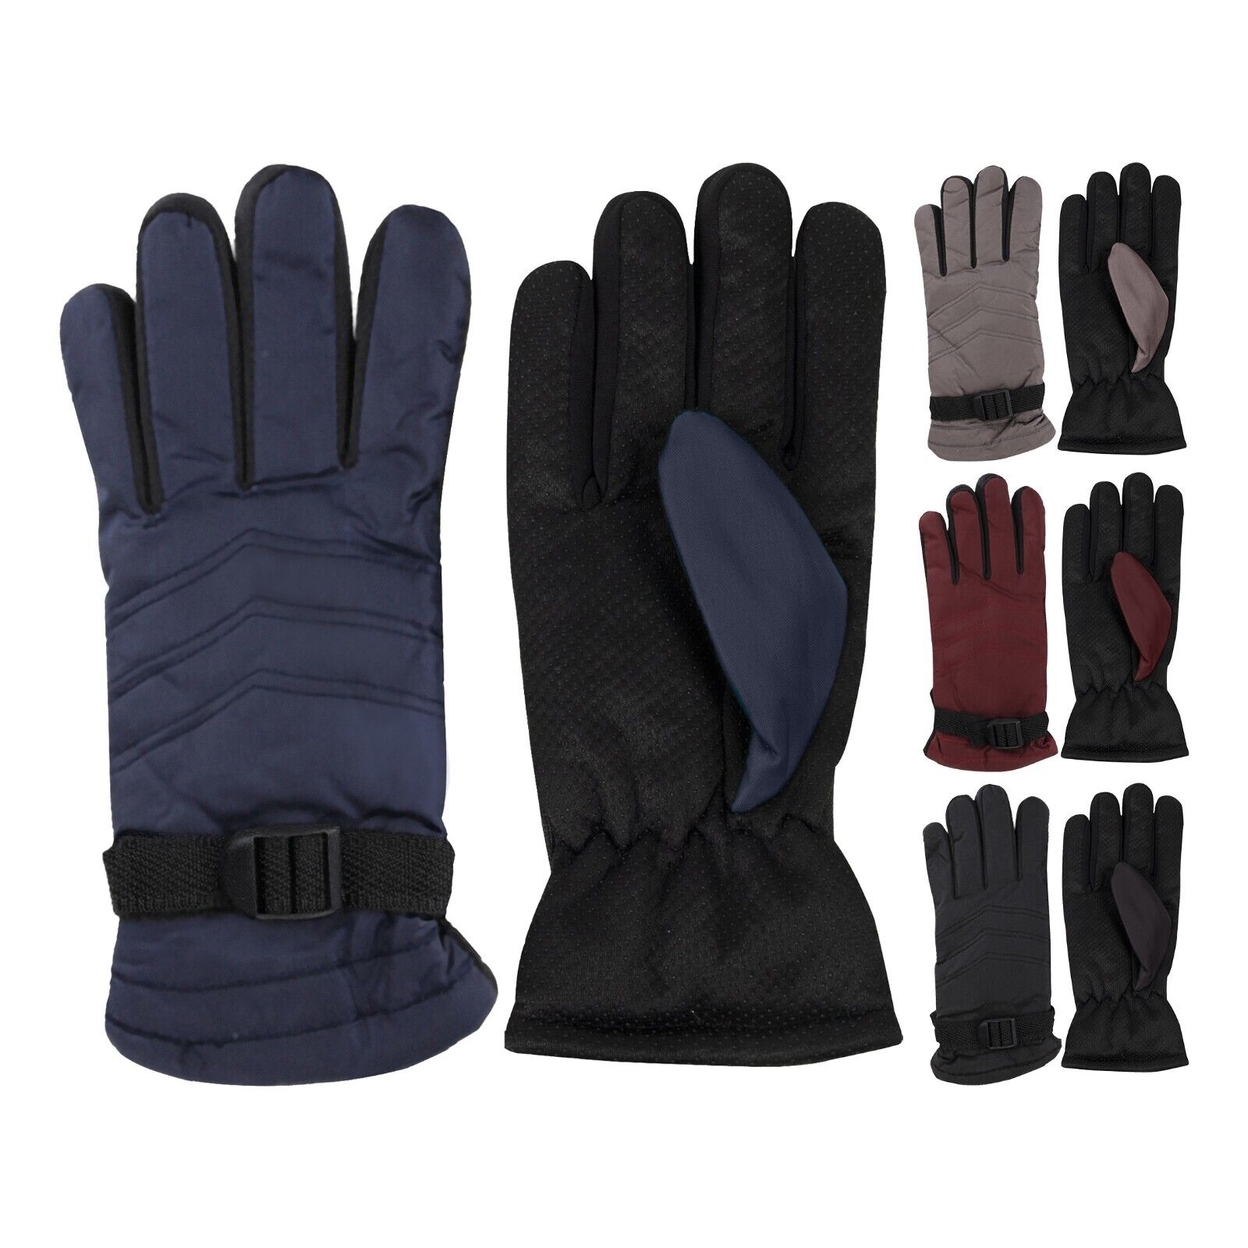 3-Pairs: Women's Cozy Fur Lined Snow Ski Warm Winter Gloves - Black,grey,blue